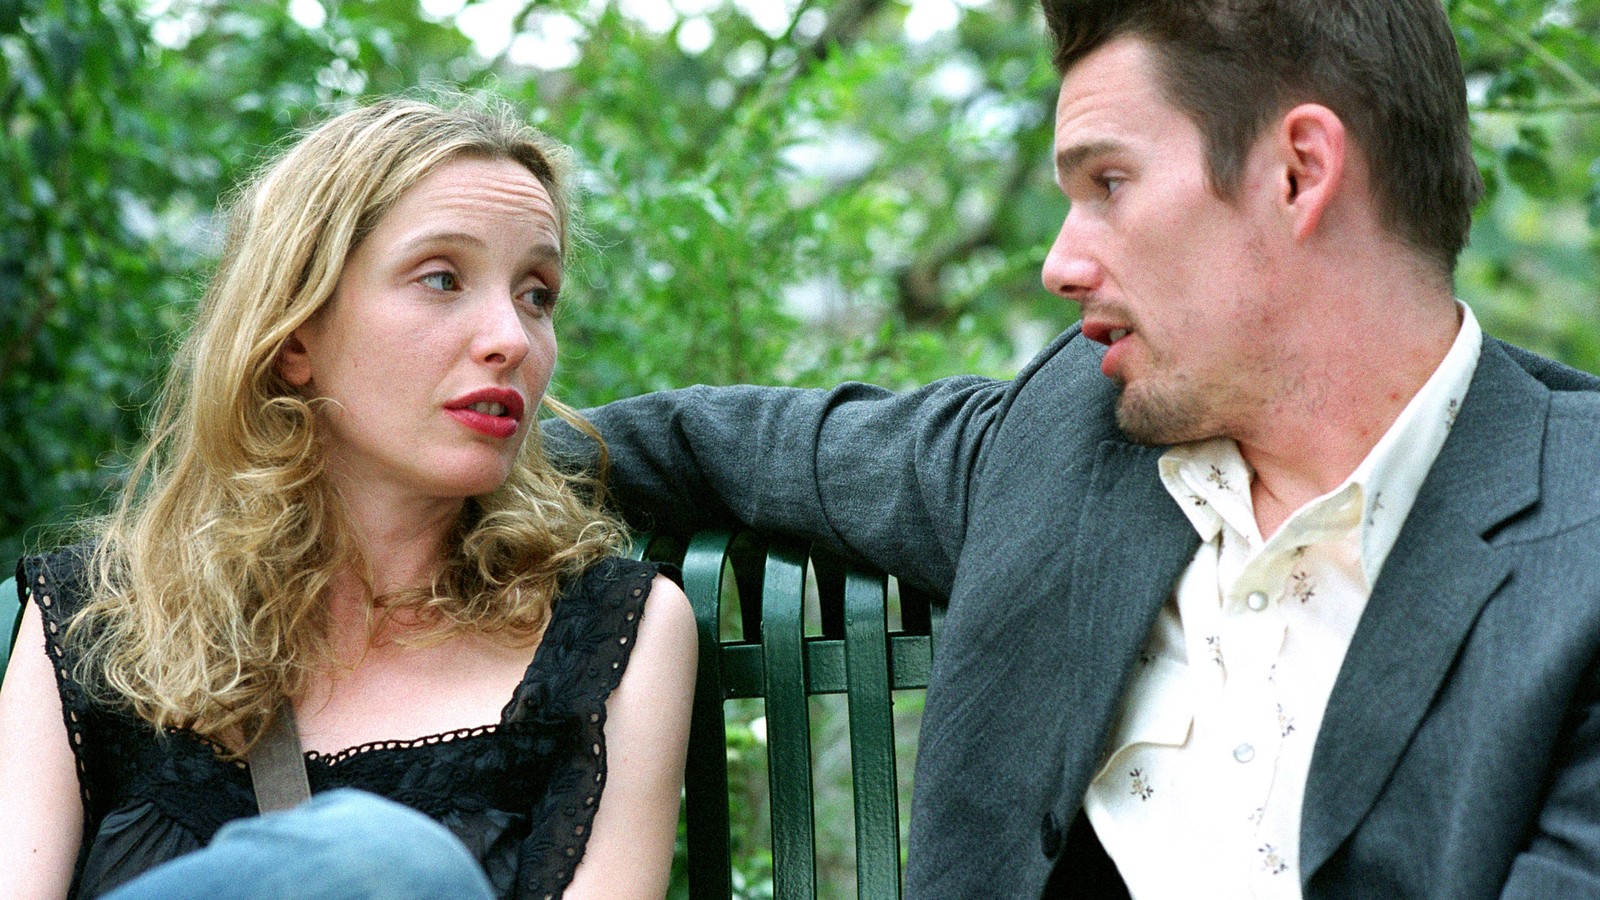 Weird Scarlett Johansson Movie On HBO Max Has People Talking